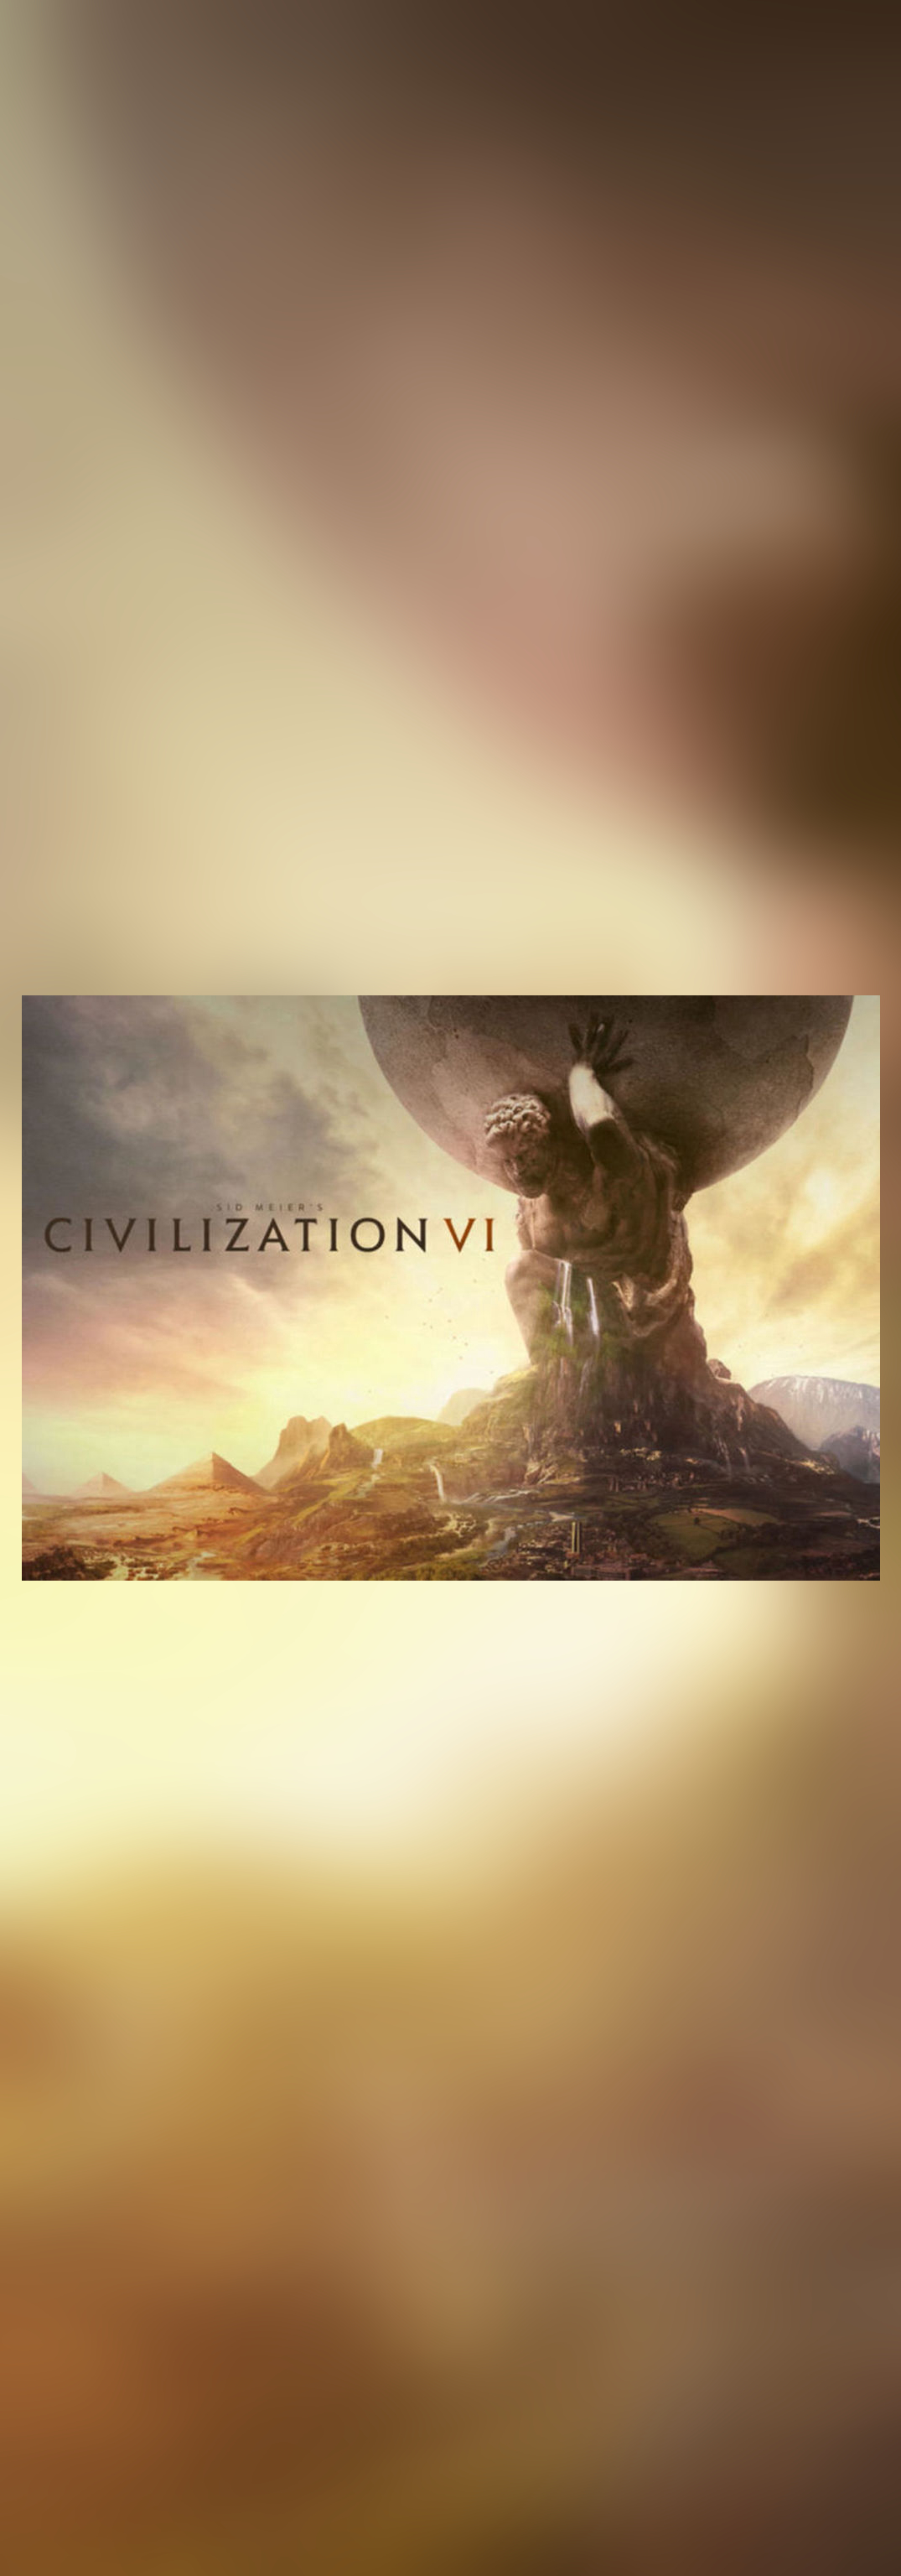 civalation free online civilization wars 2 unblocked